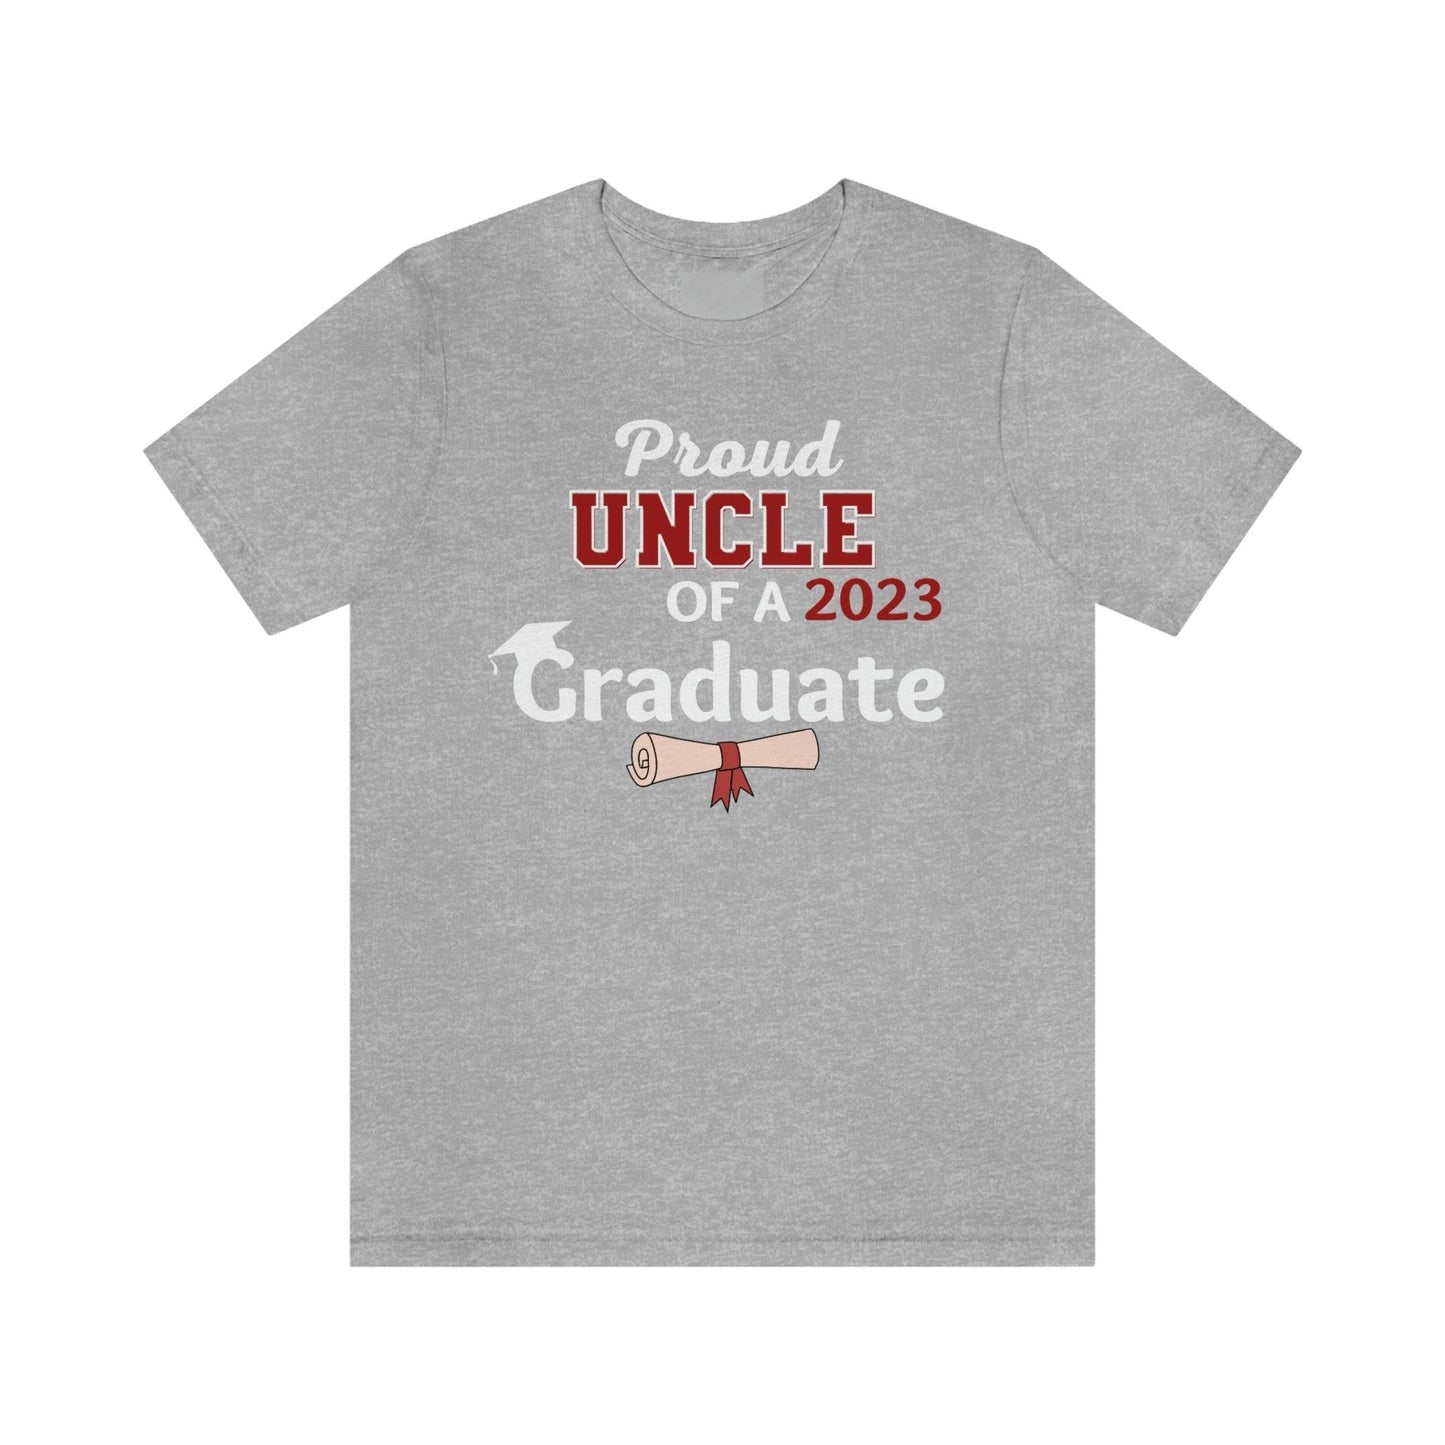 Proud Uncle of a Graduate shirt - Graduation shirt - Graduation gift